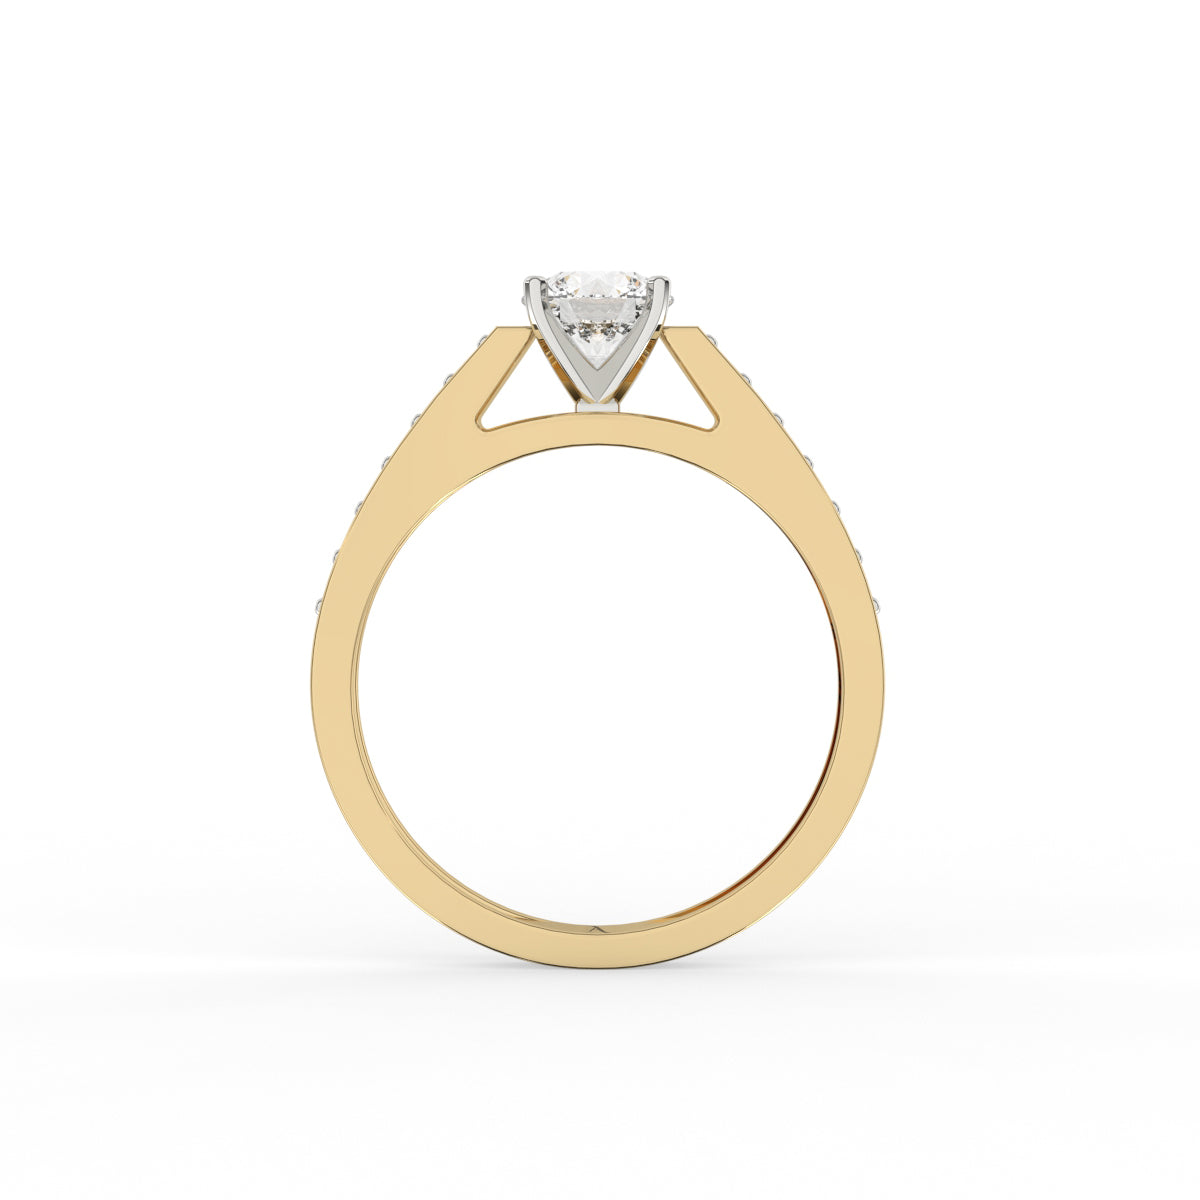 Round accent diamond ring